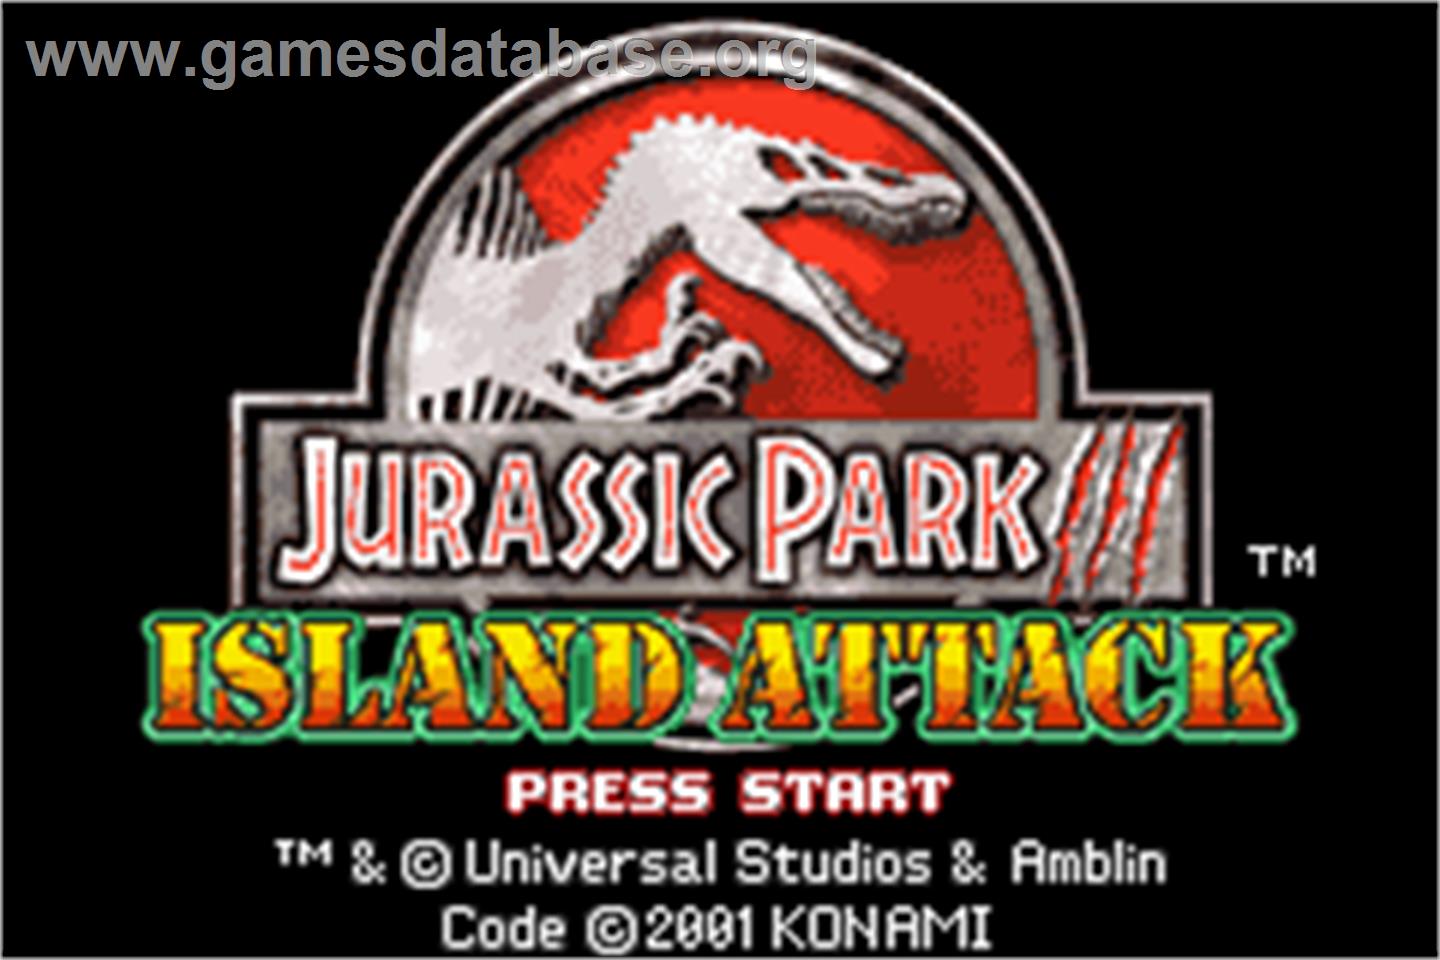 Jurassic Park III: Island Attack - Nintendo Game Boy Advance - Artwork - Title Screen